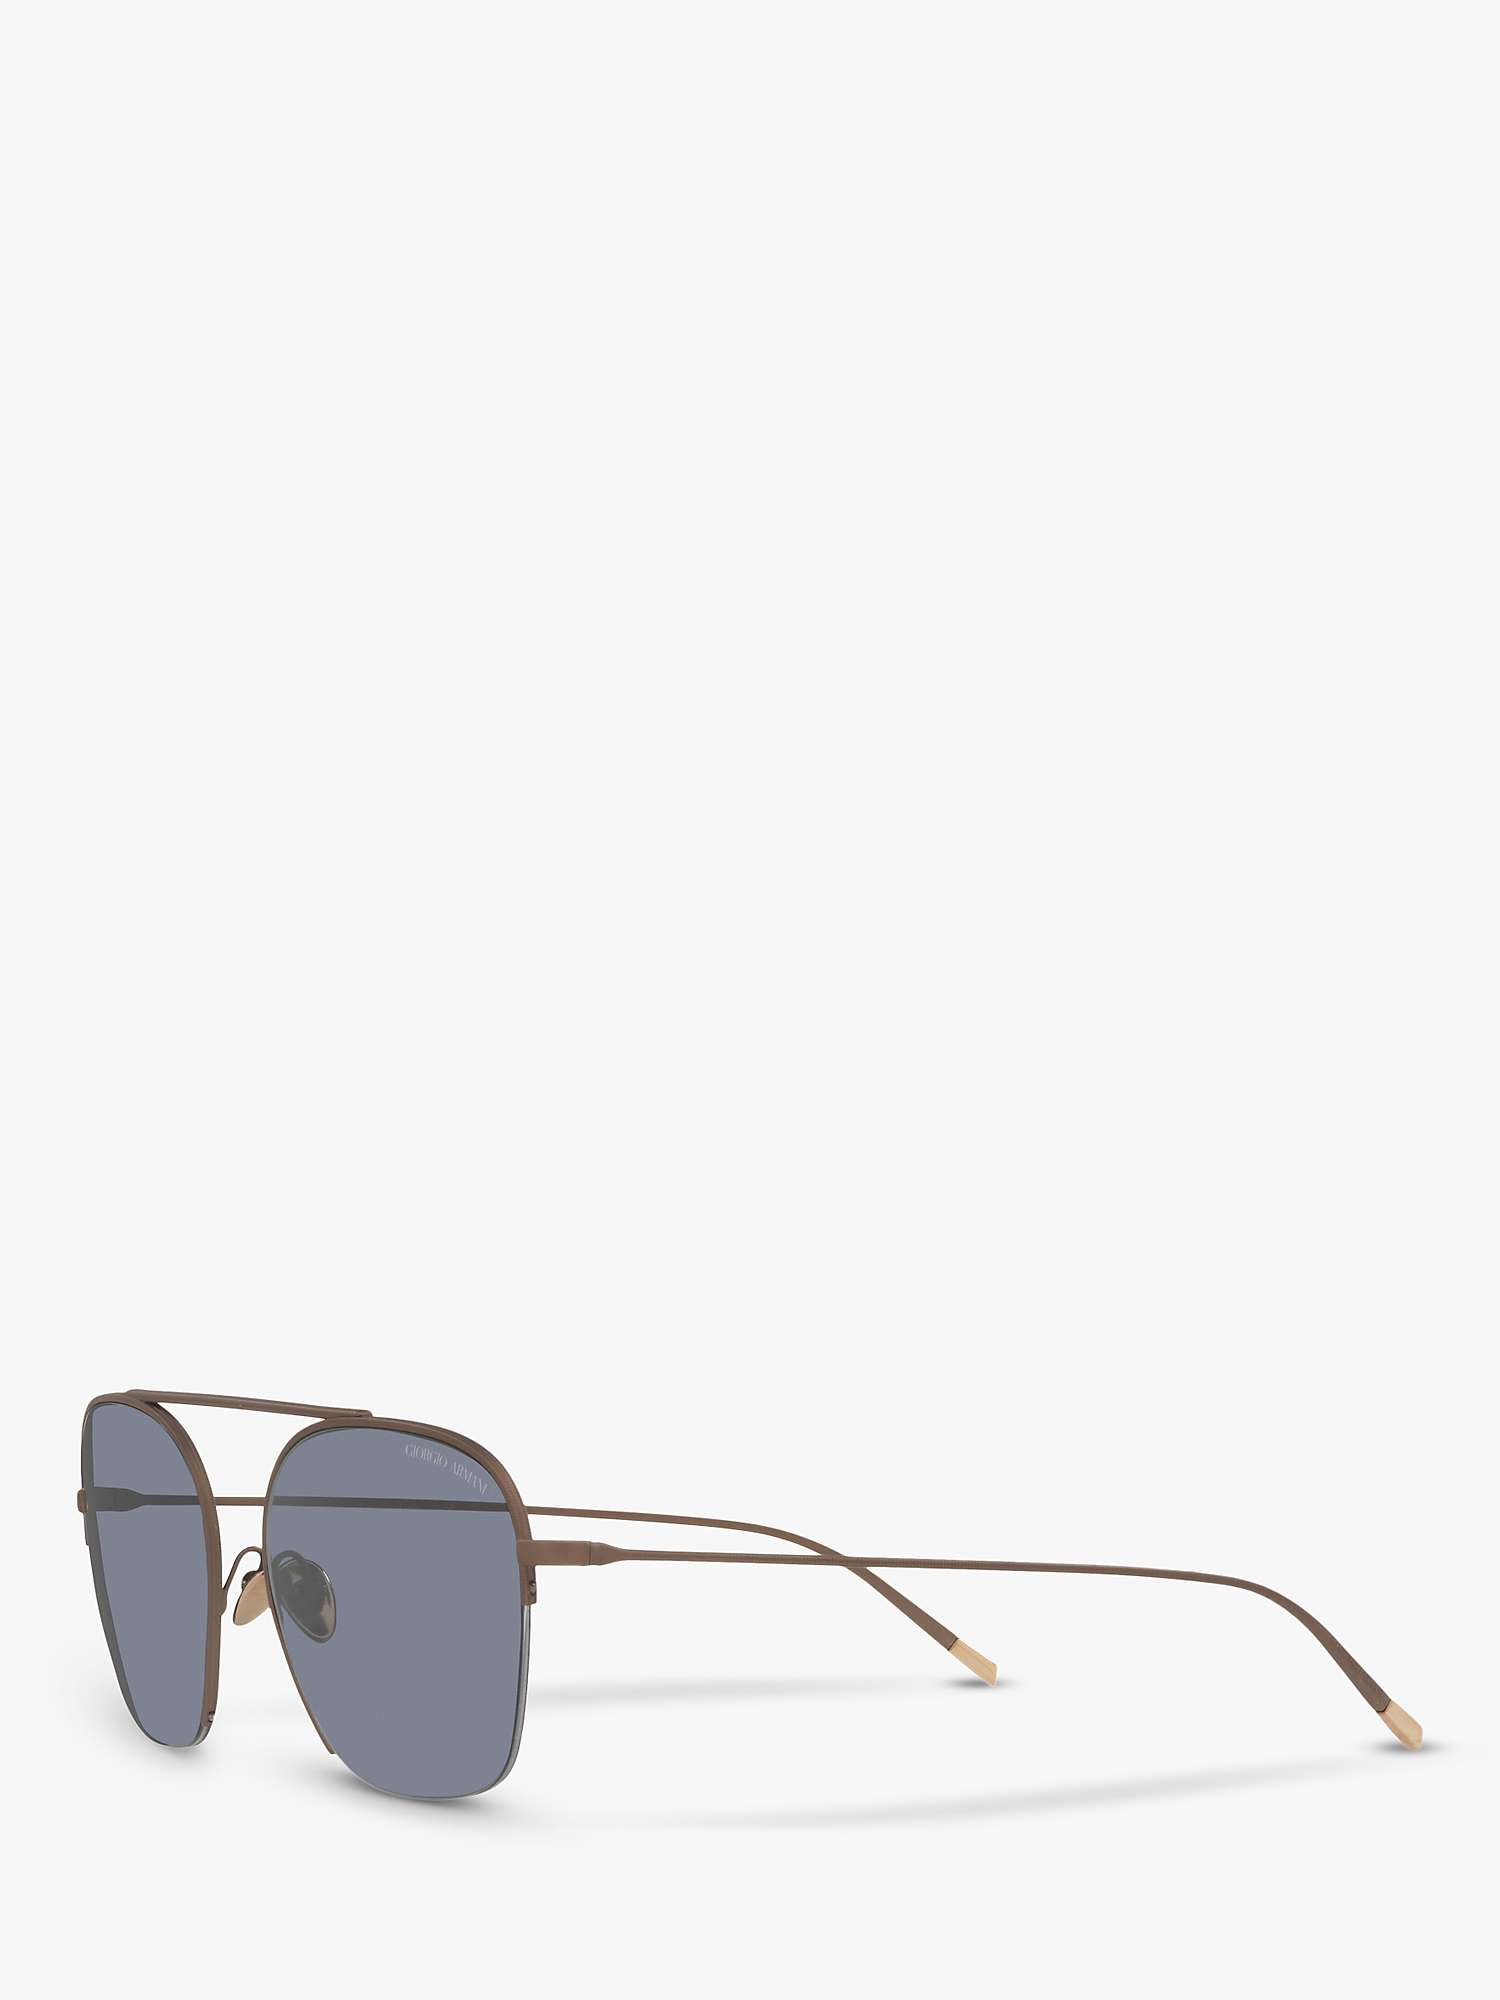 Buy Giorgio Armani AR6124 Men's Square Sunglasses, Bronze/Blue Online at johnlewis.com